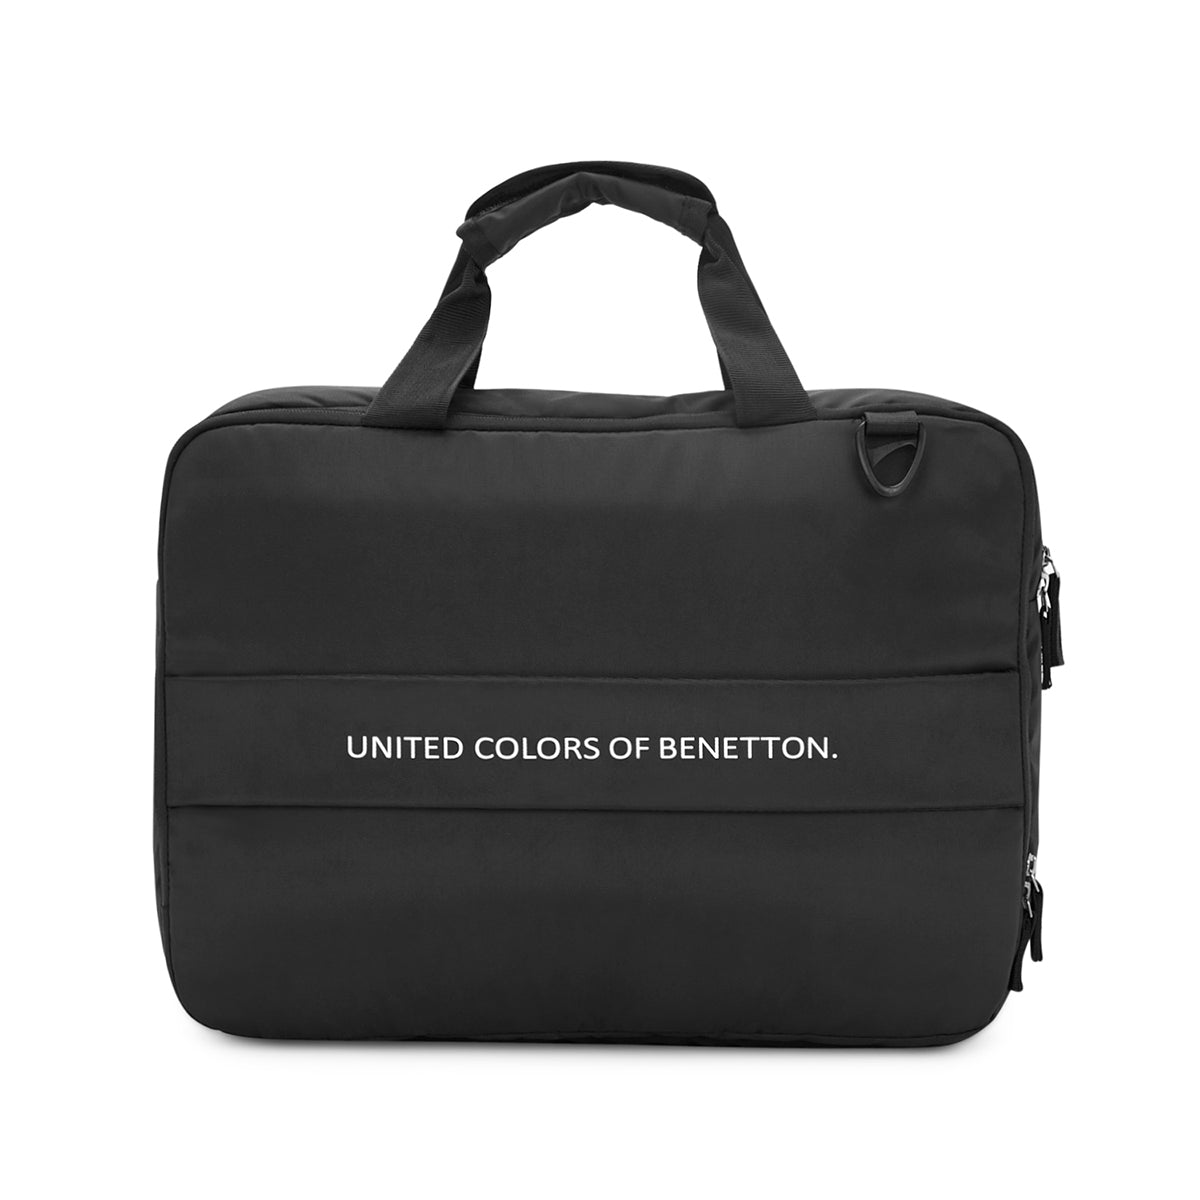 United Colors of Benetton Clover Business Case Black